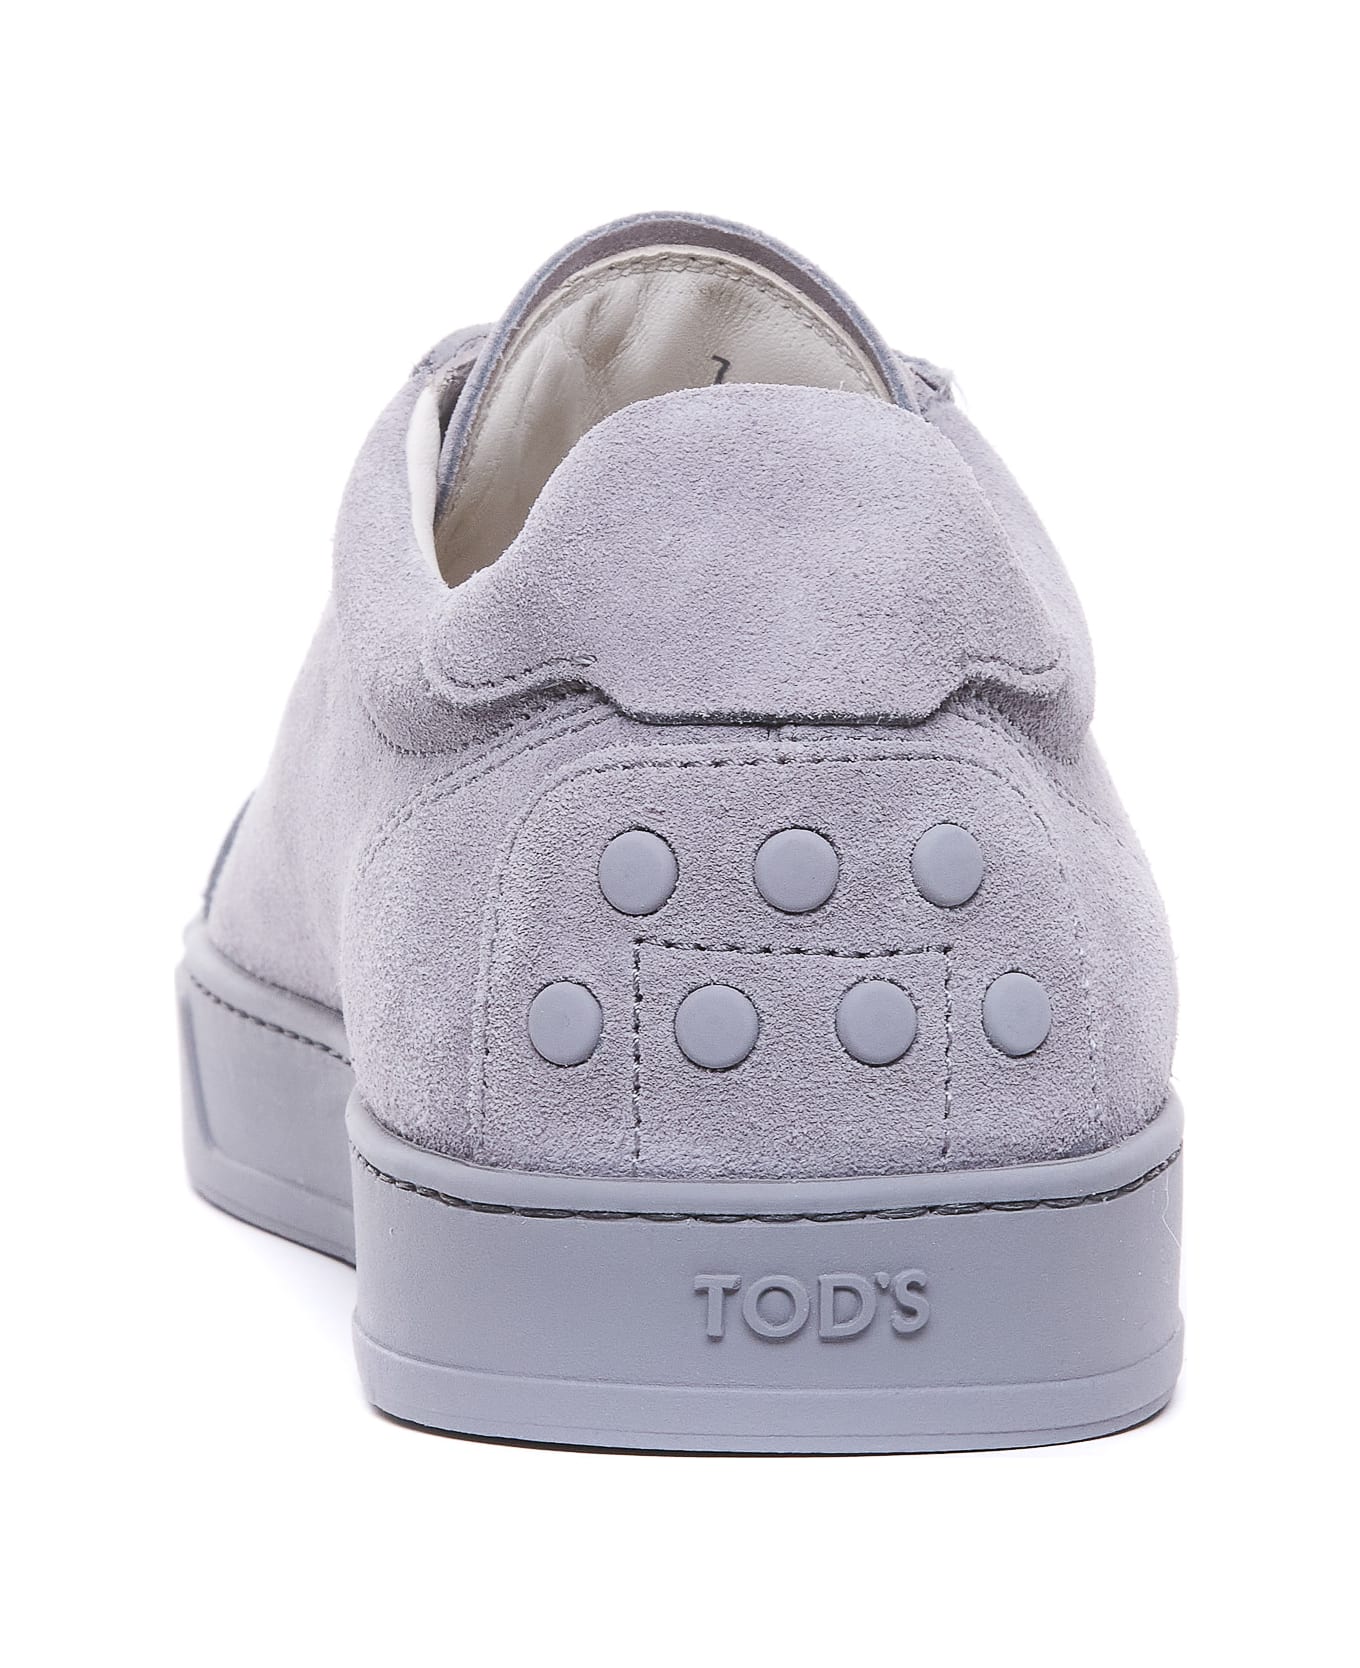 Tod's Sneakers - Grey